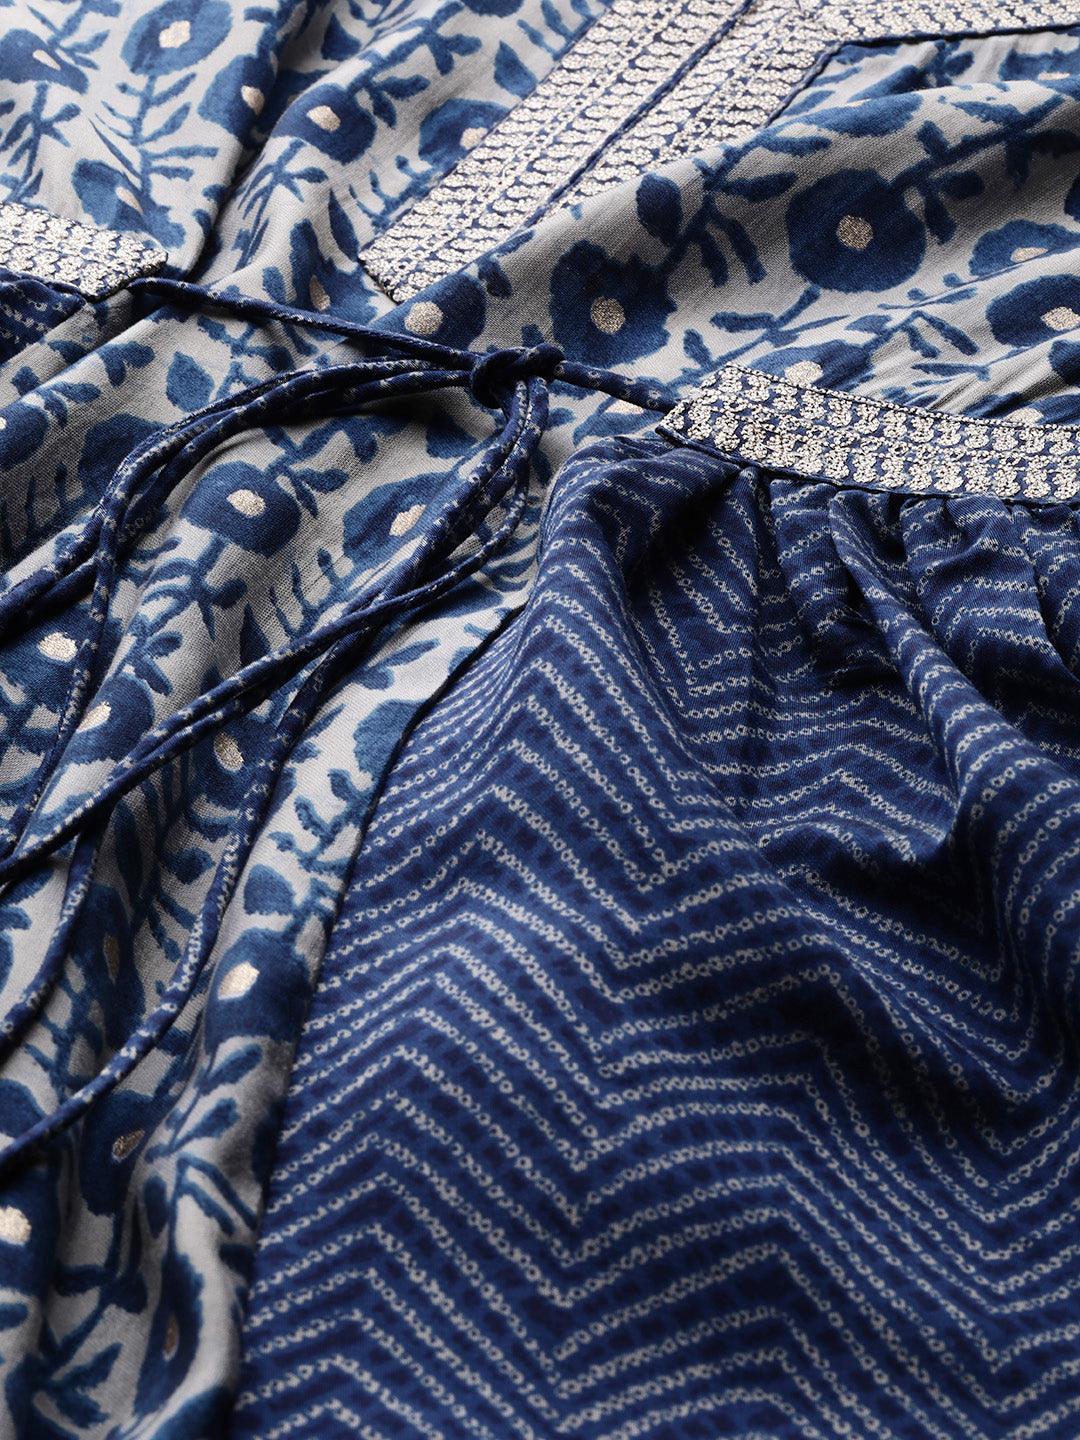 Navy Blue Printed Silk Dress - Libas